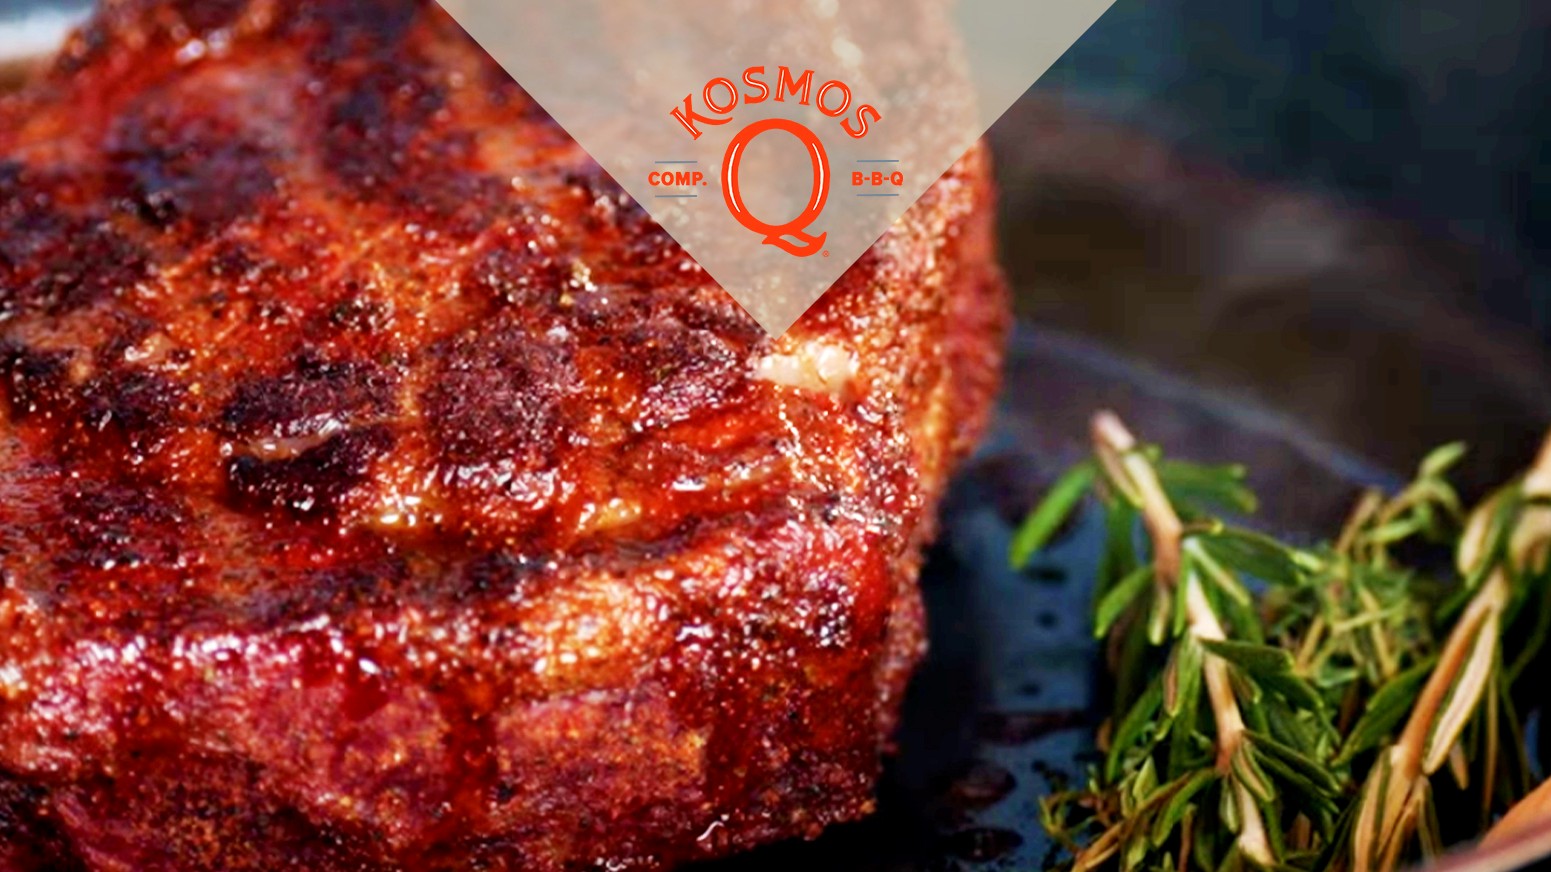 Searing Steak on a Traeger! - Kosmos Q BBQ Products & Supplies